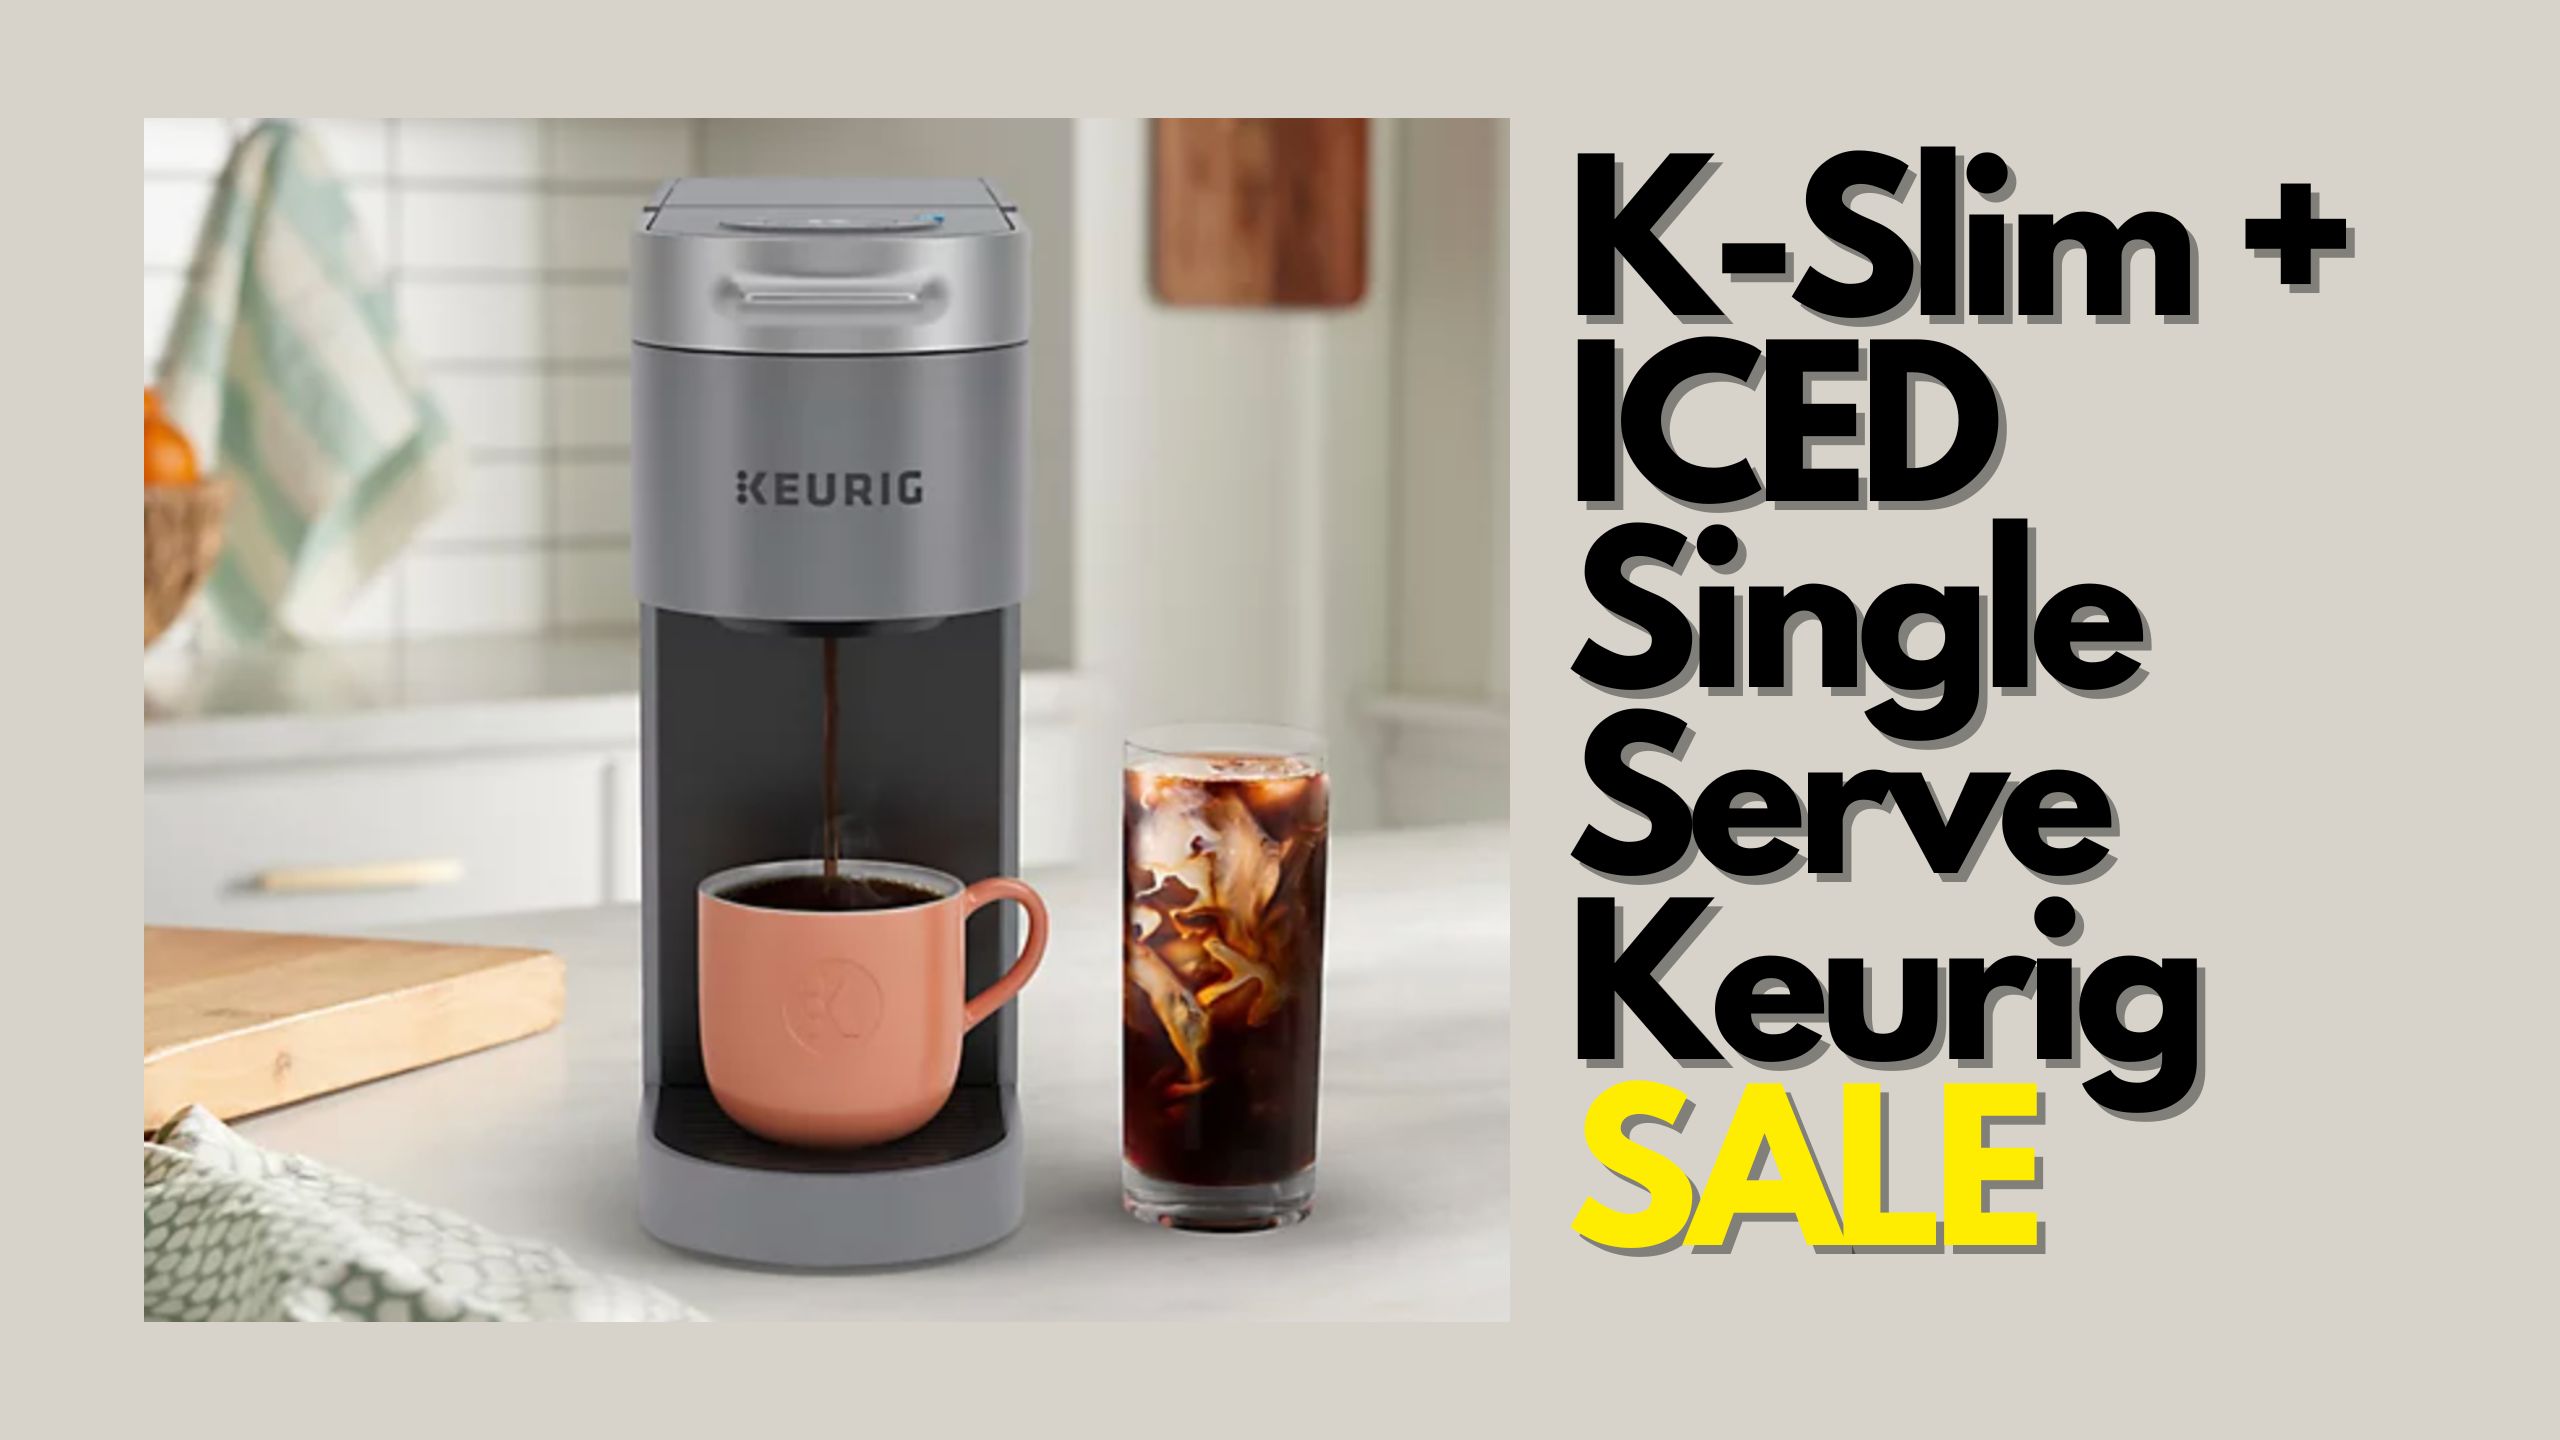 Keurig K Iced Single Serve Coffee Maker 